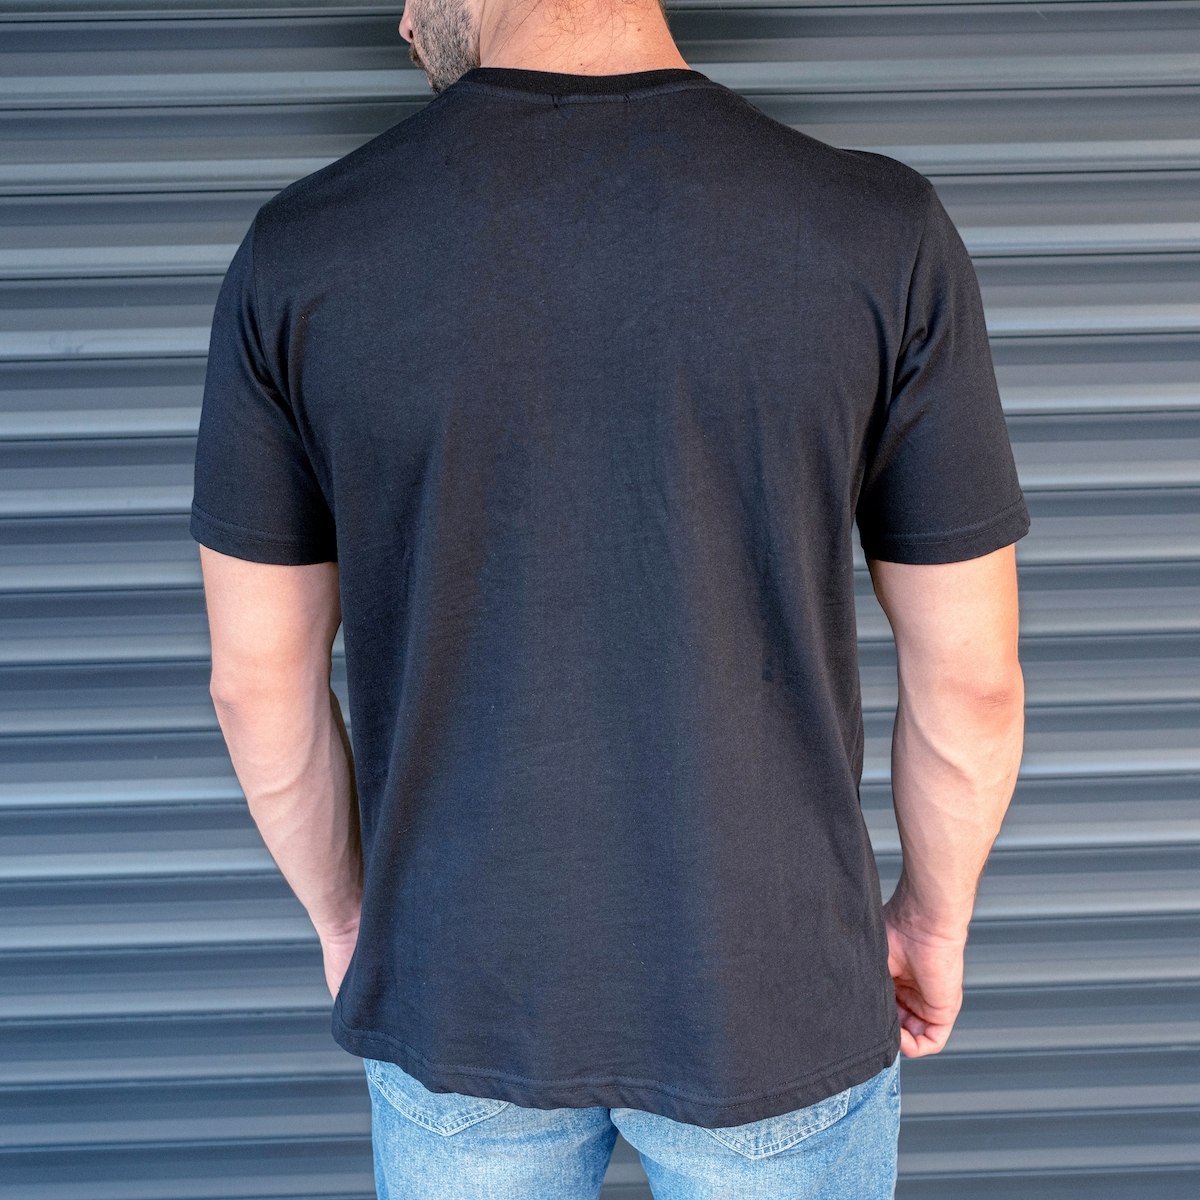 Men's "Doberman" T-Shirt In Black - 3